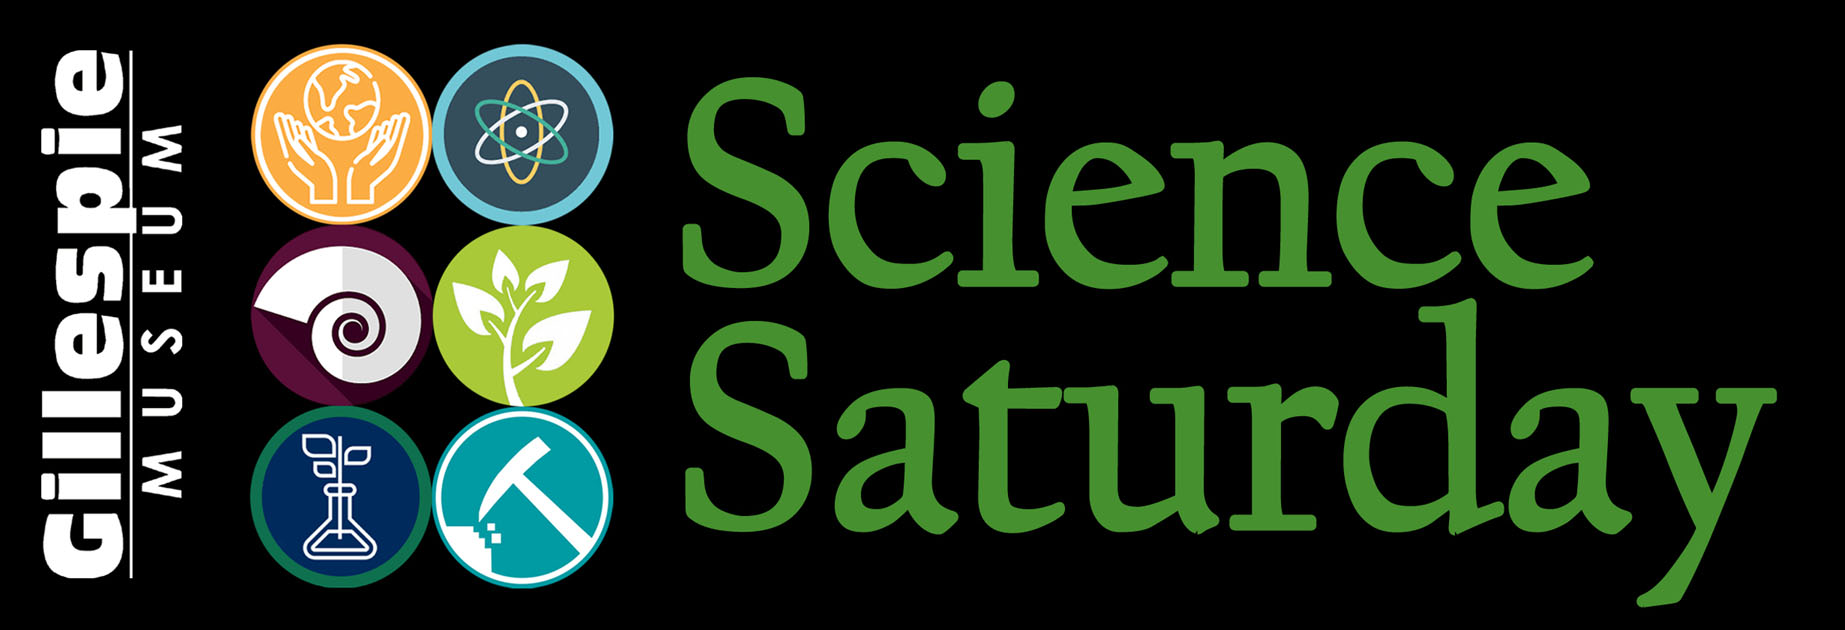 Science Saturday